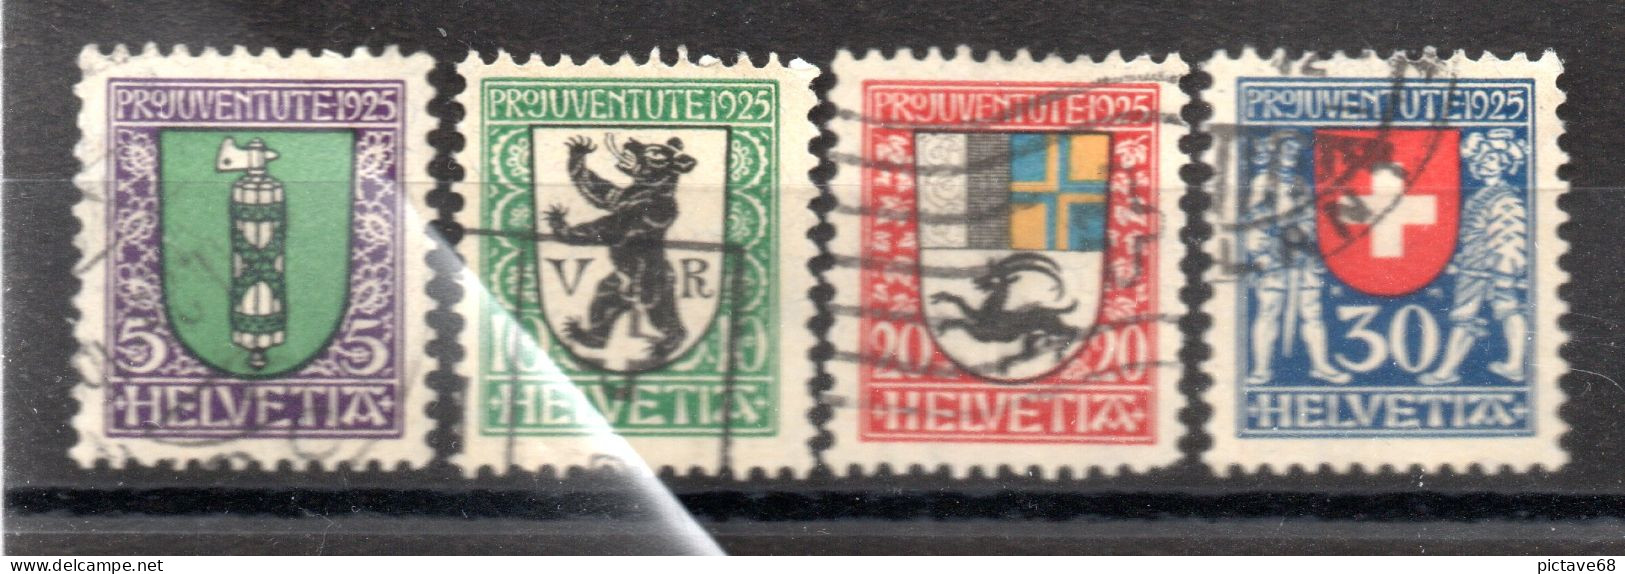 SUISSE / SERIE PROJUVENTE 1925 N° 218 à 221 - Used Stamps